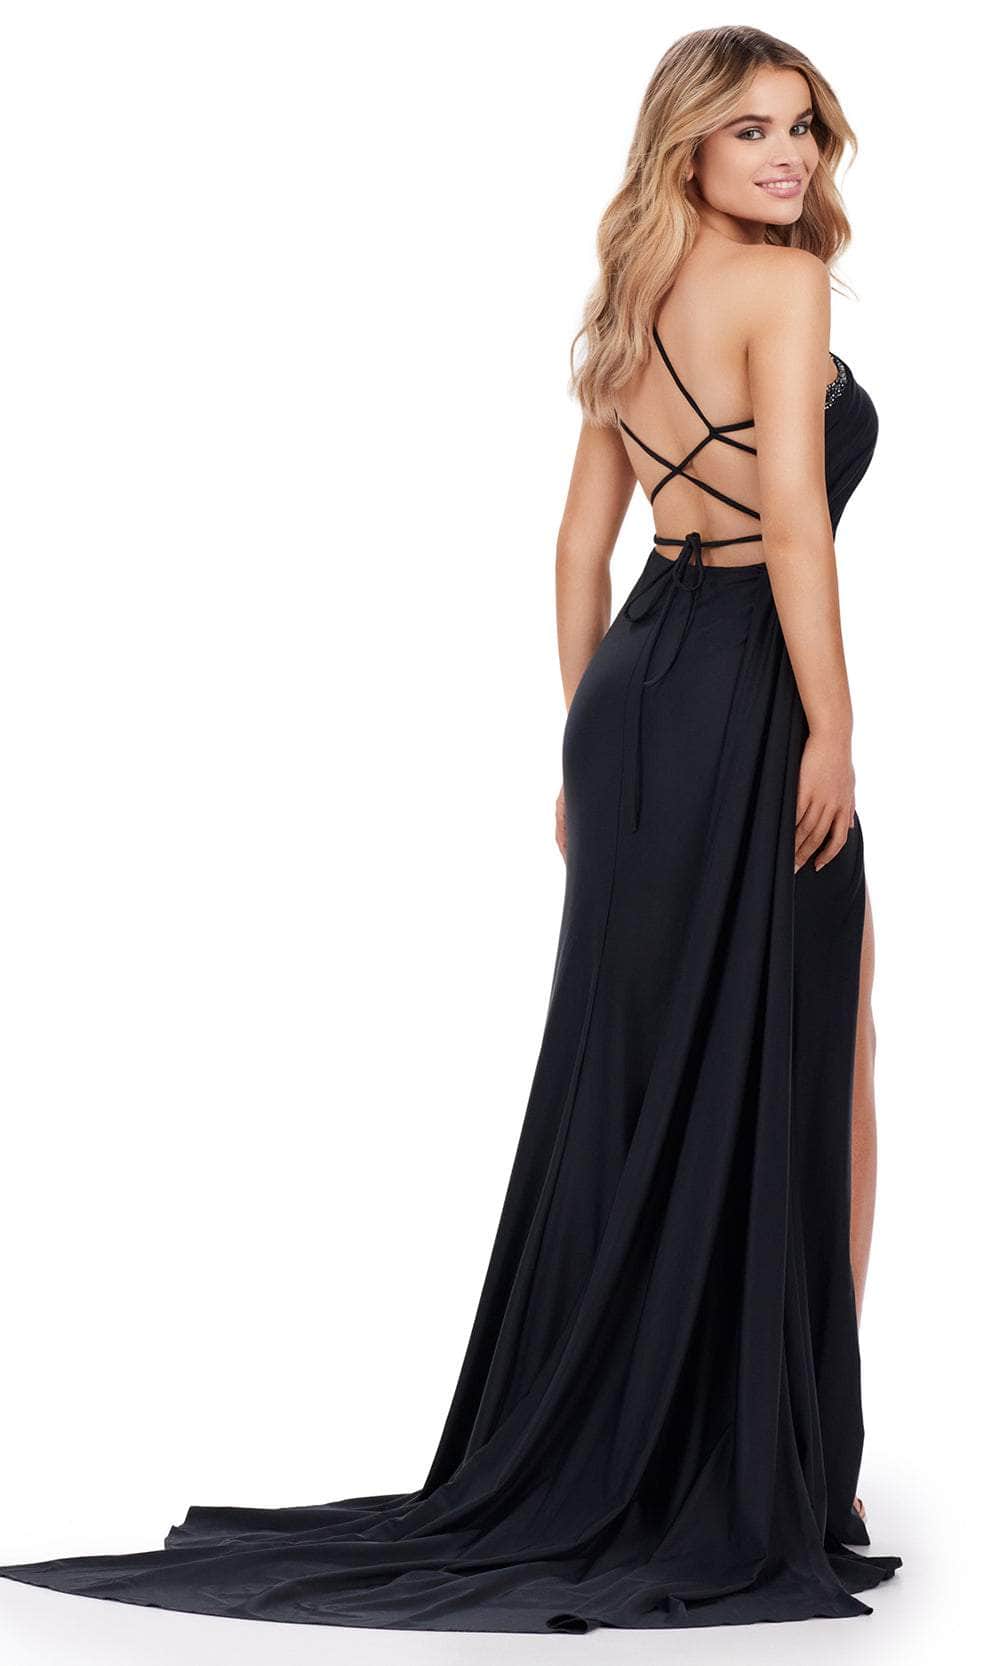 Ashley Lauren 11539 - Asymmetrical Neck Crystal Beaded Gown Prom Dresses